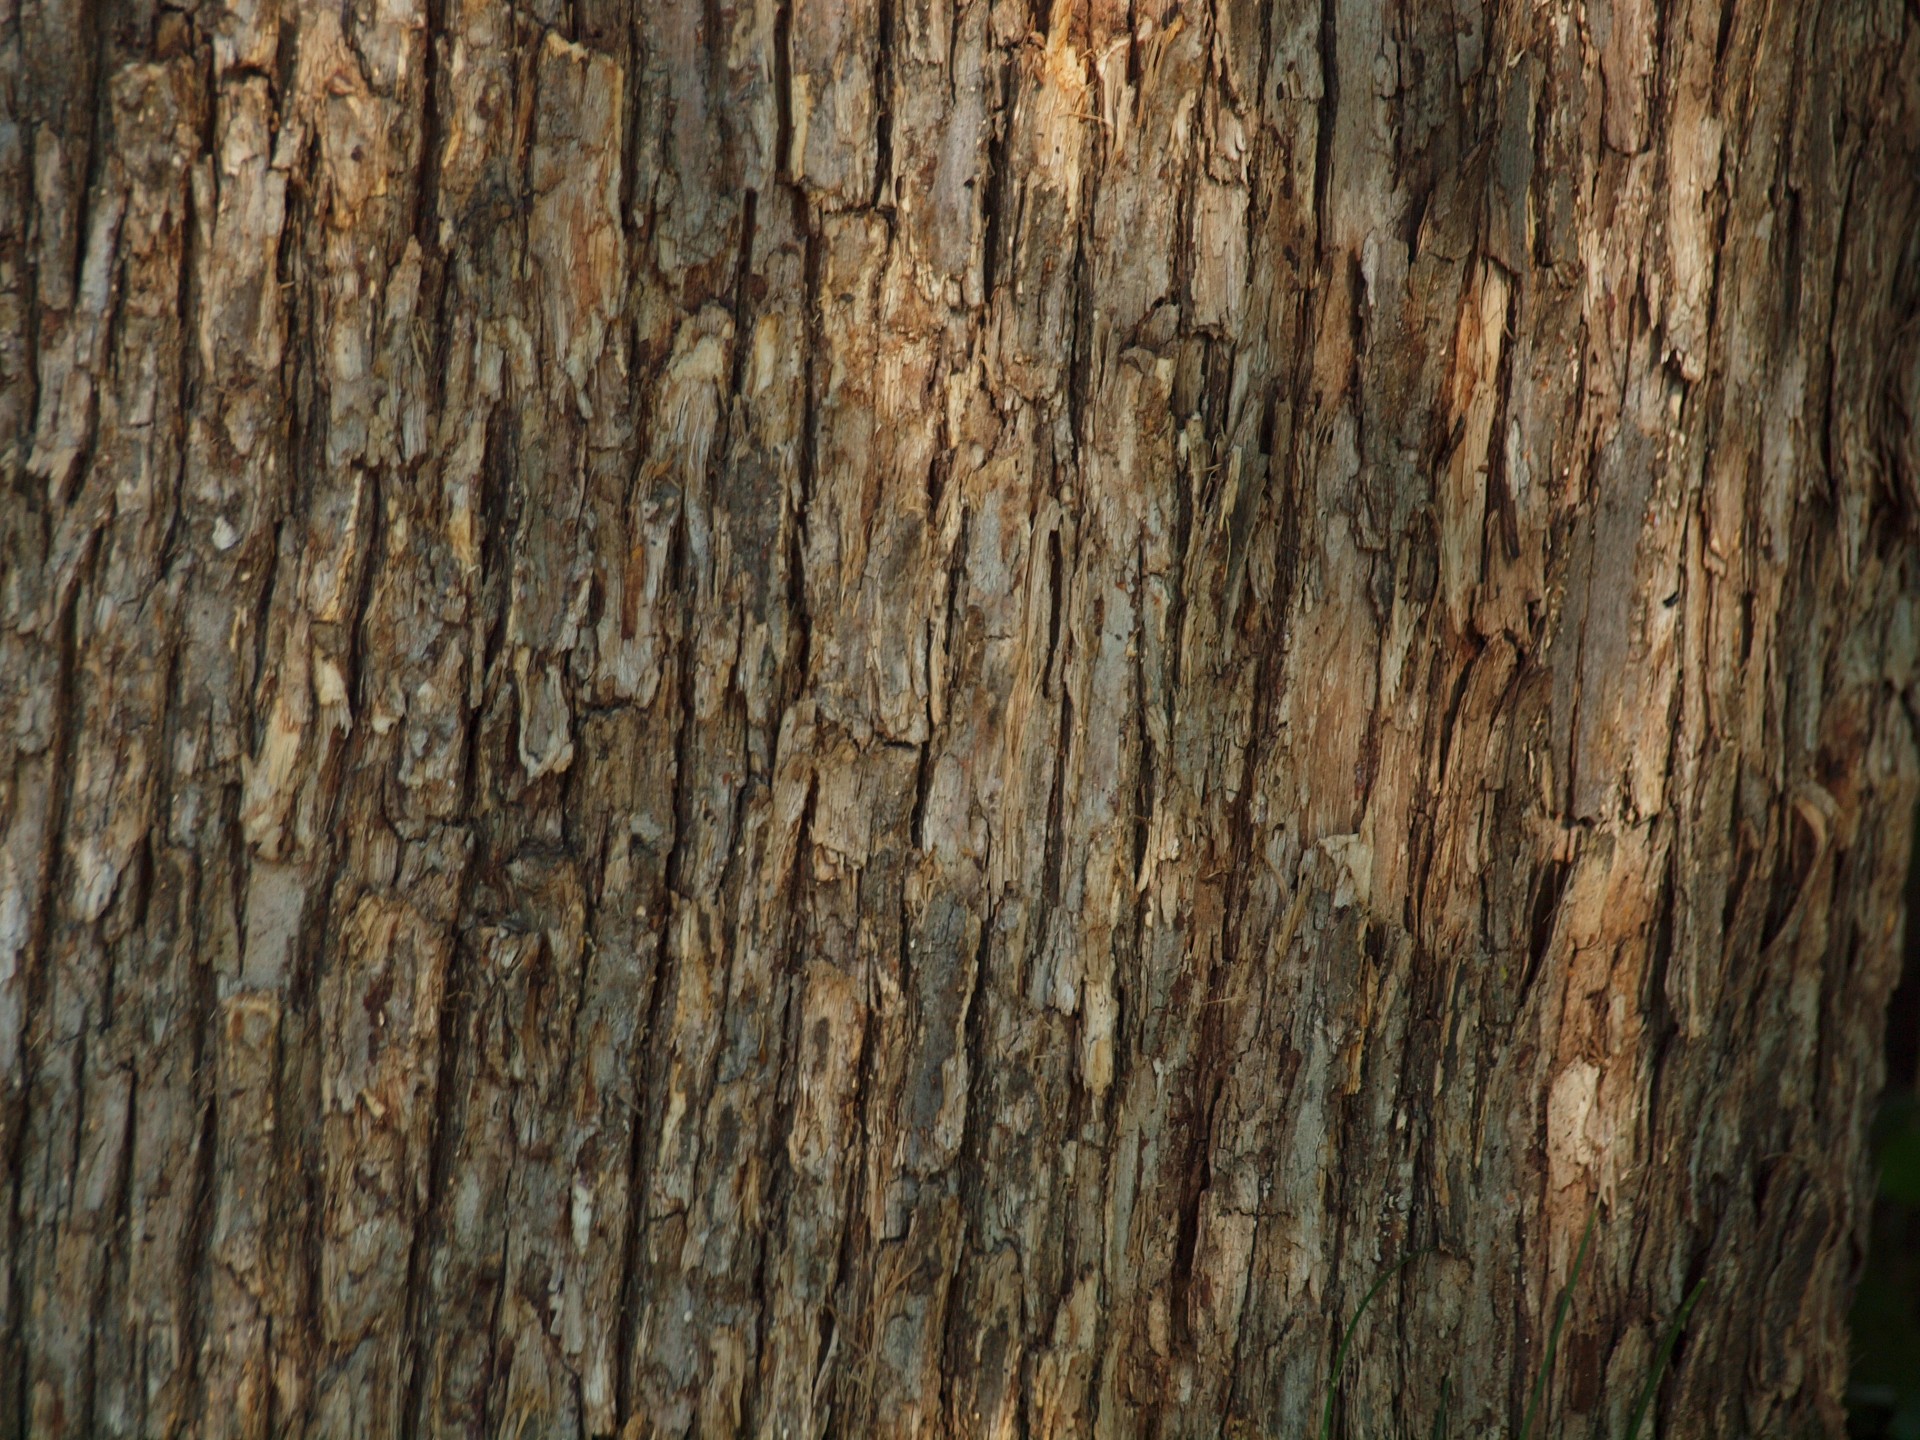 Bark texture photo